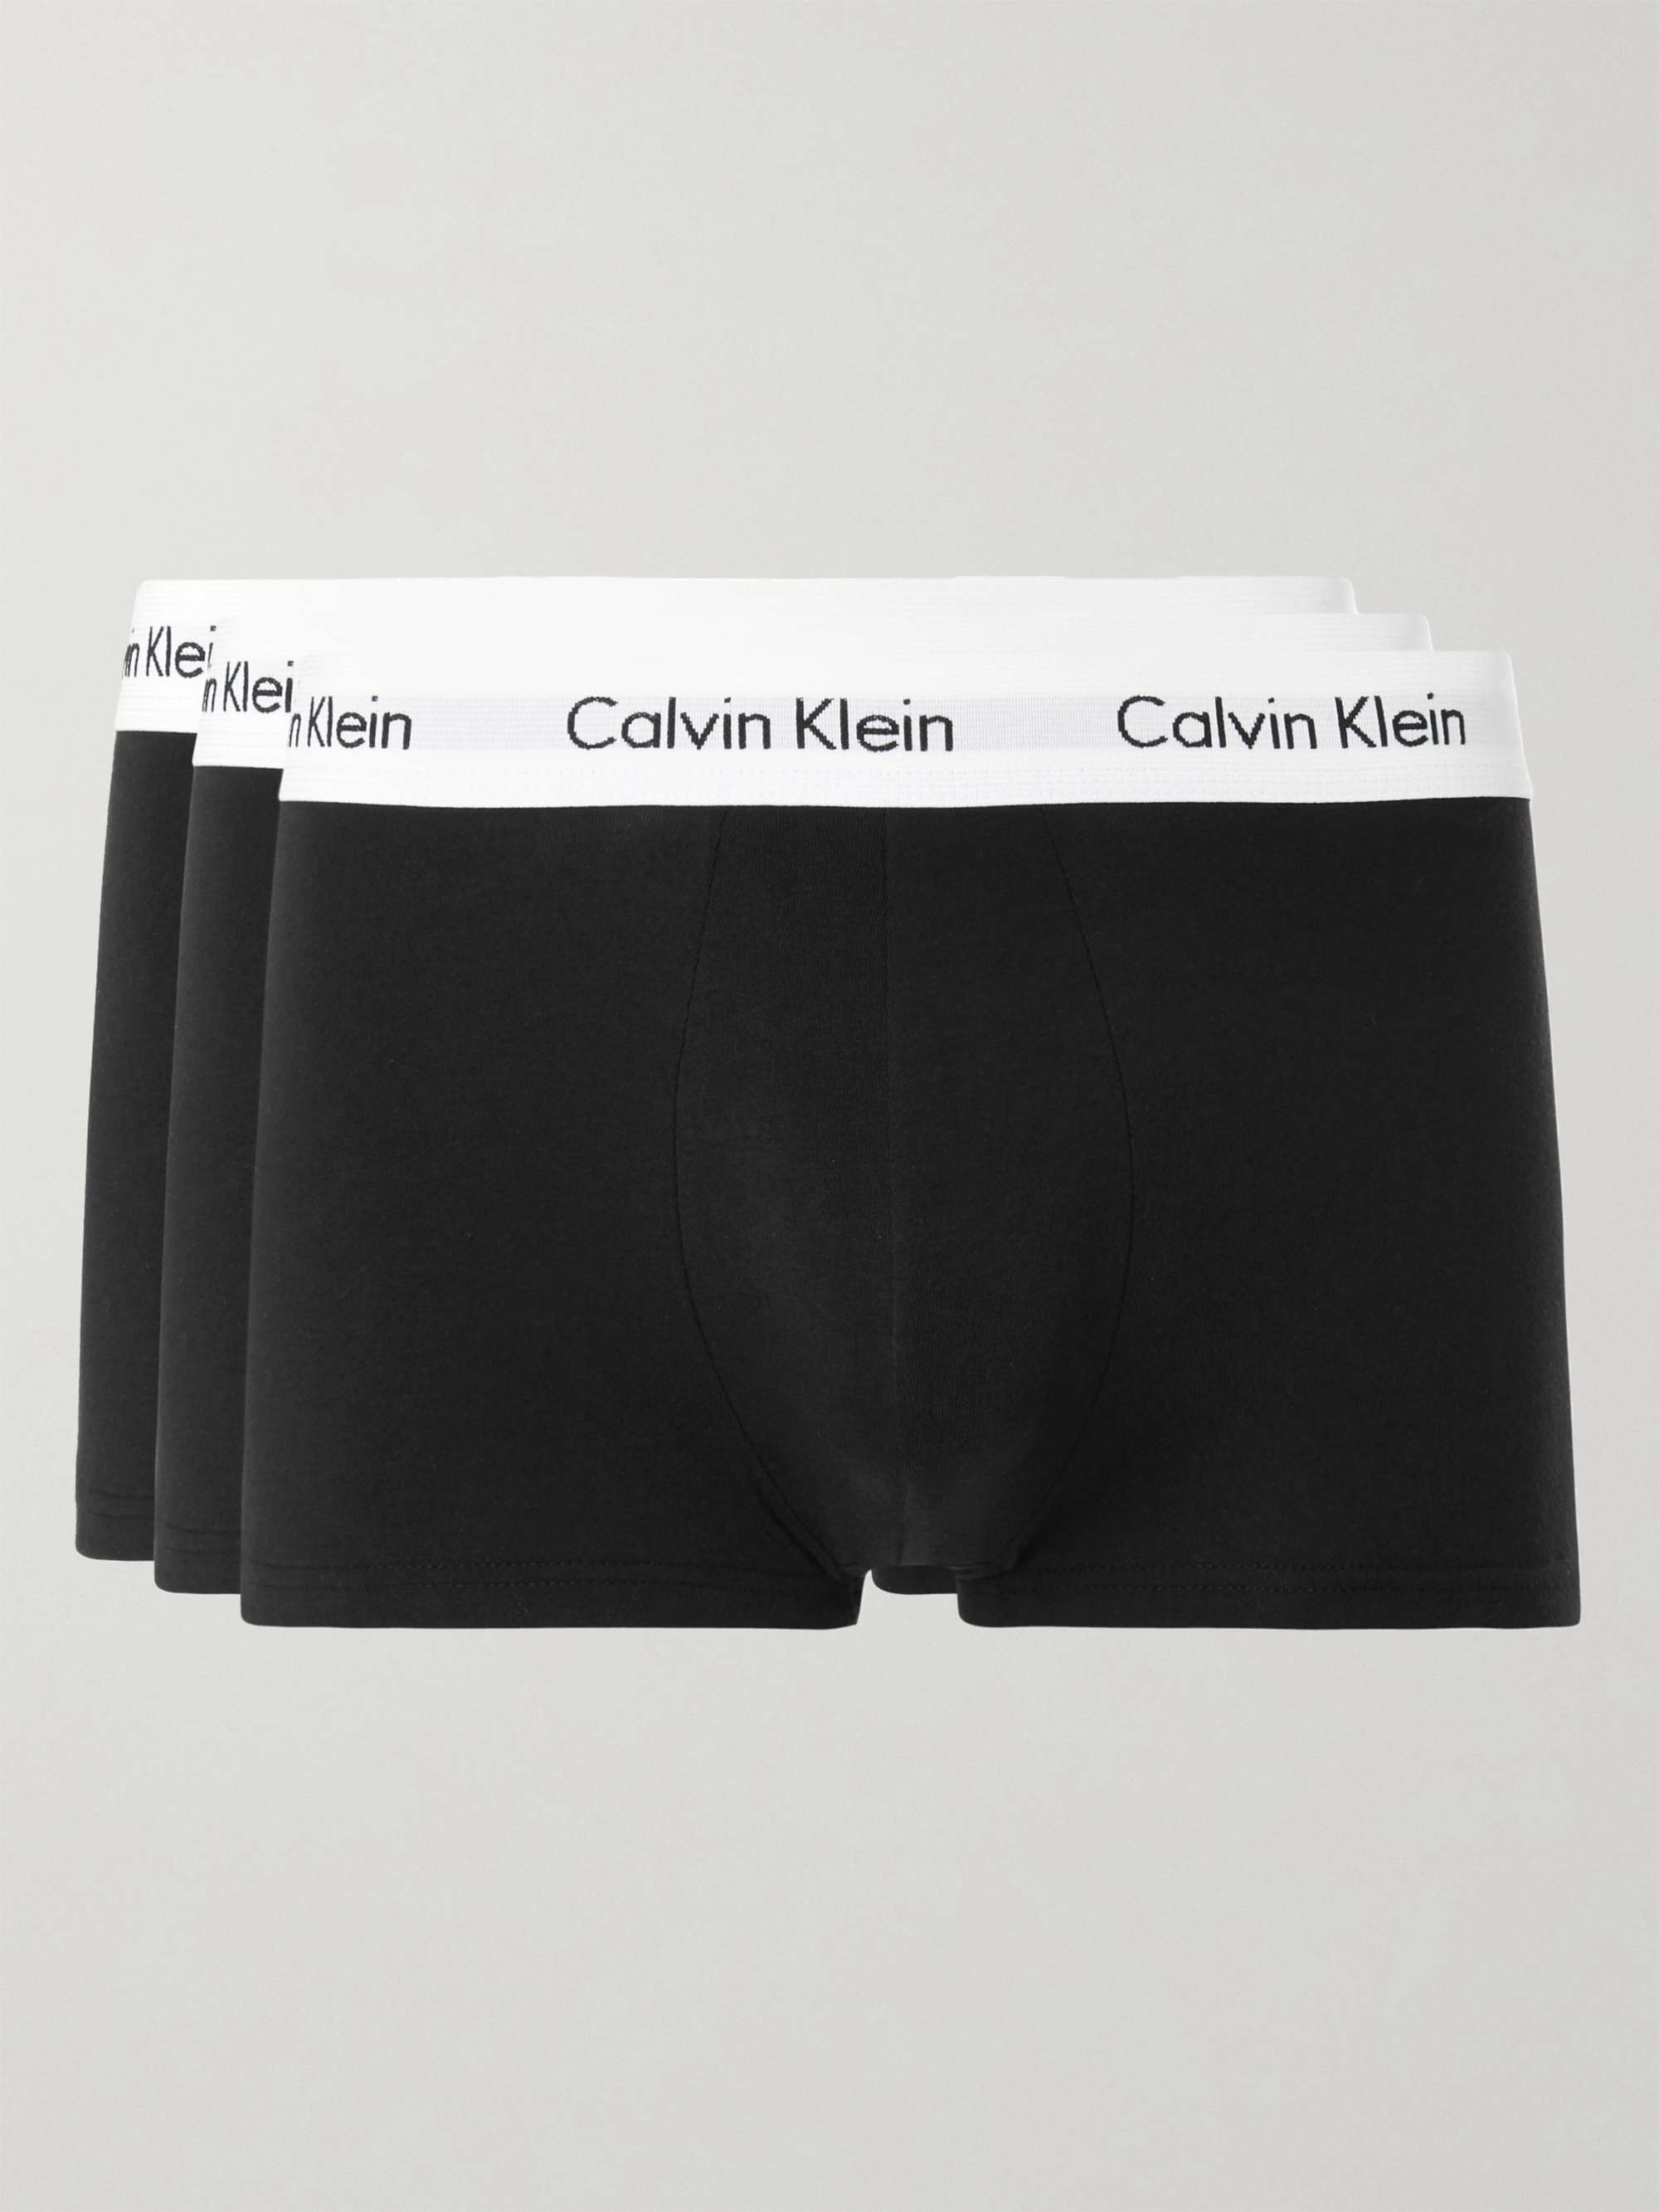 SUPREME BLACK WITH WHITE LABLE Underwear Boxer Briefs Size M (SINGLES) ONE  BOXER